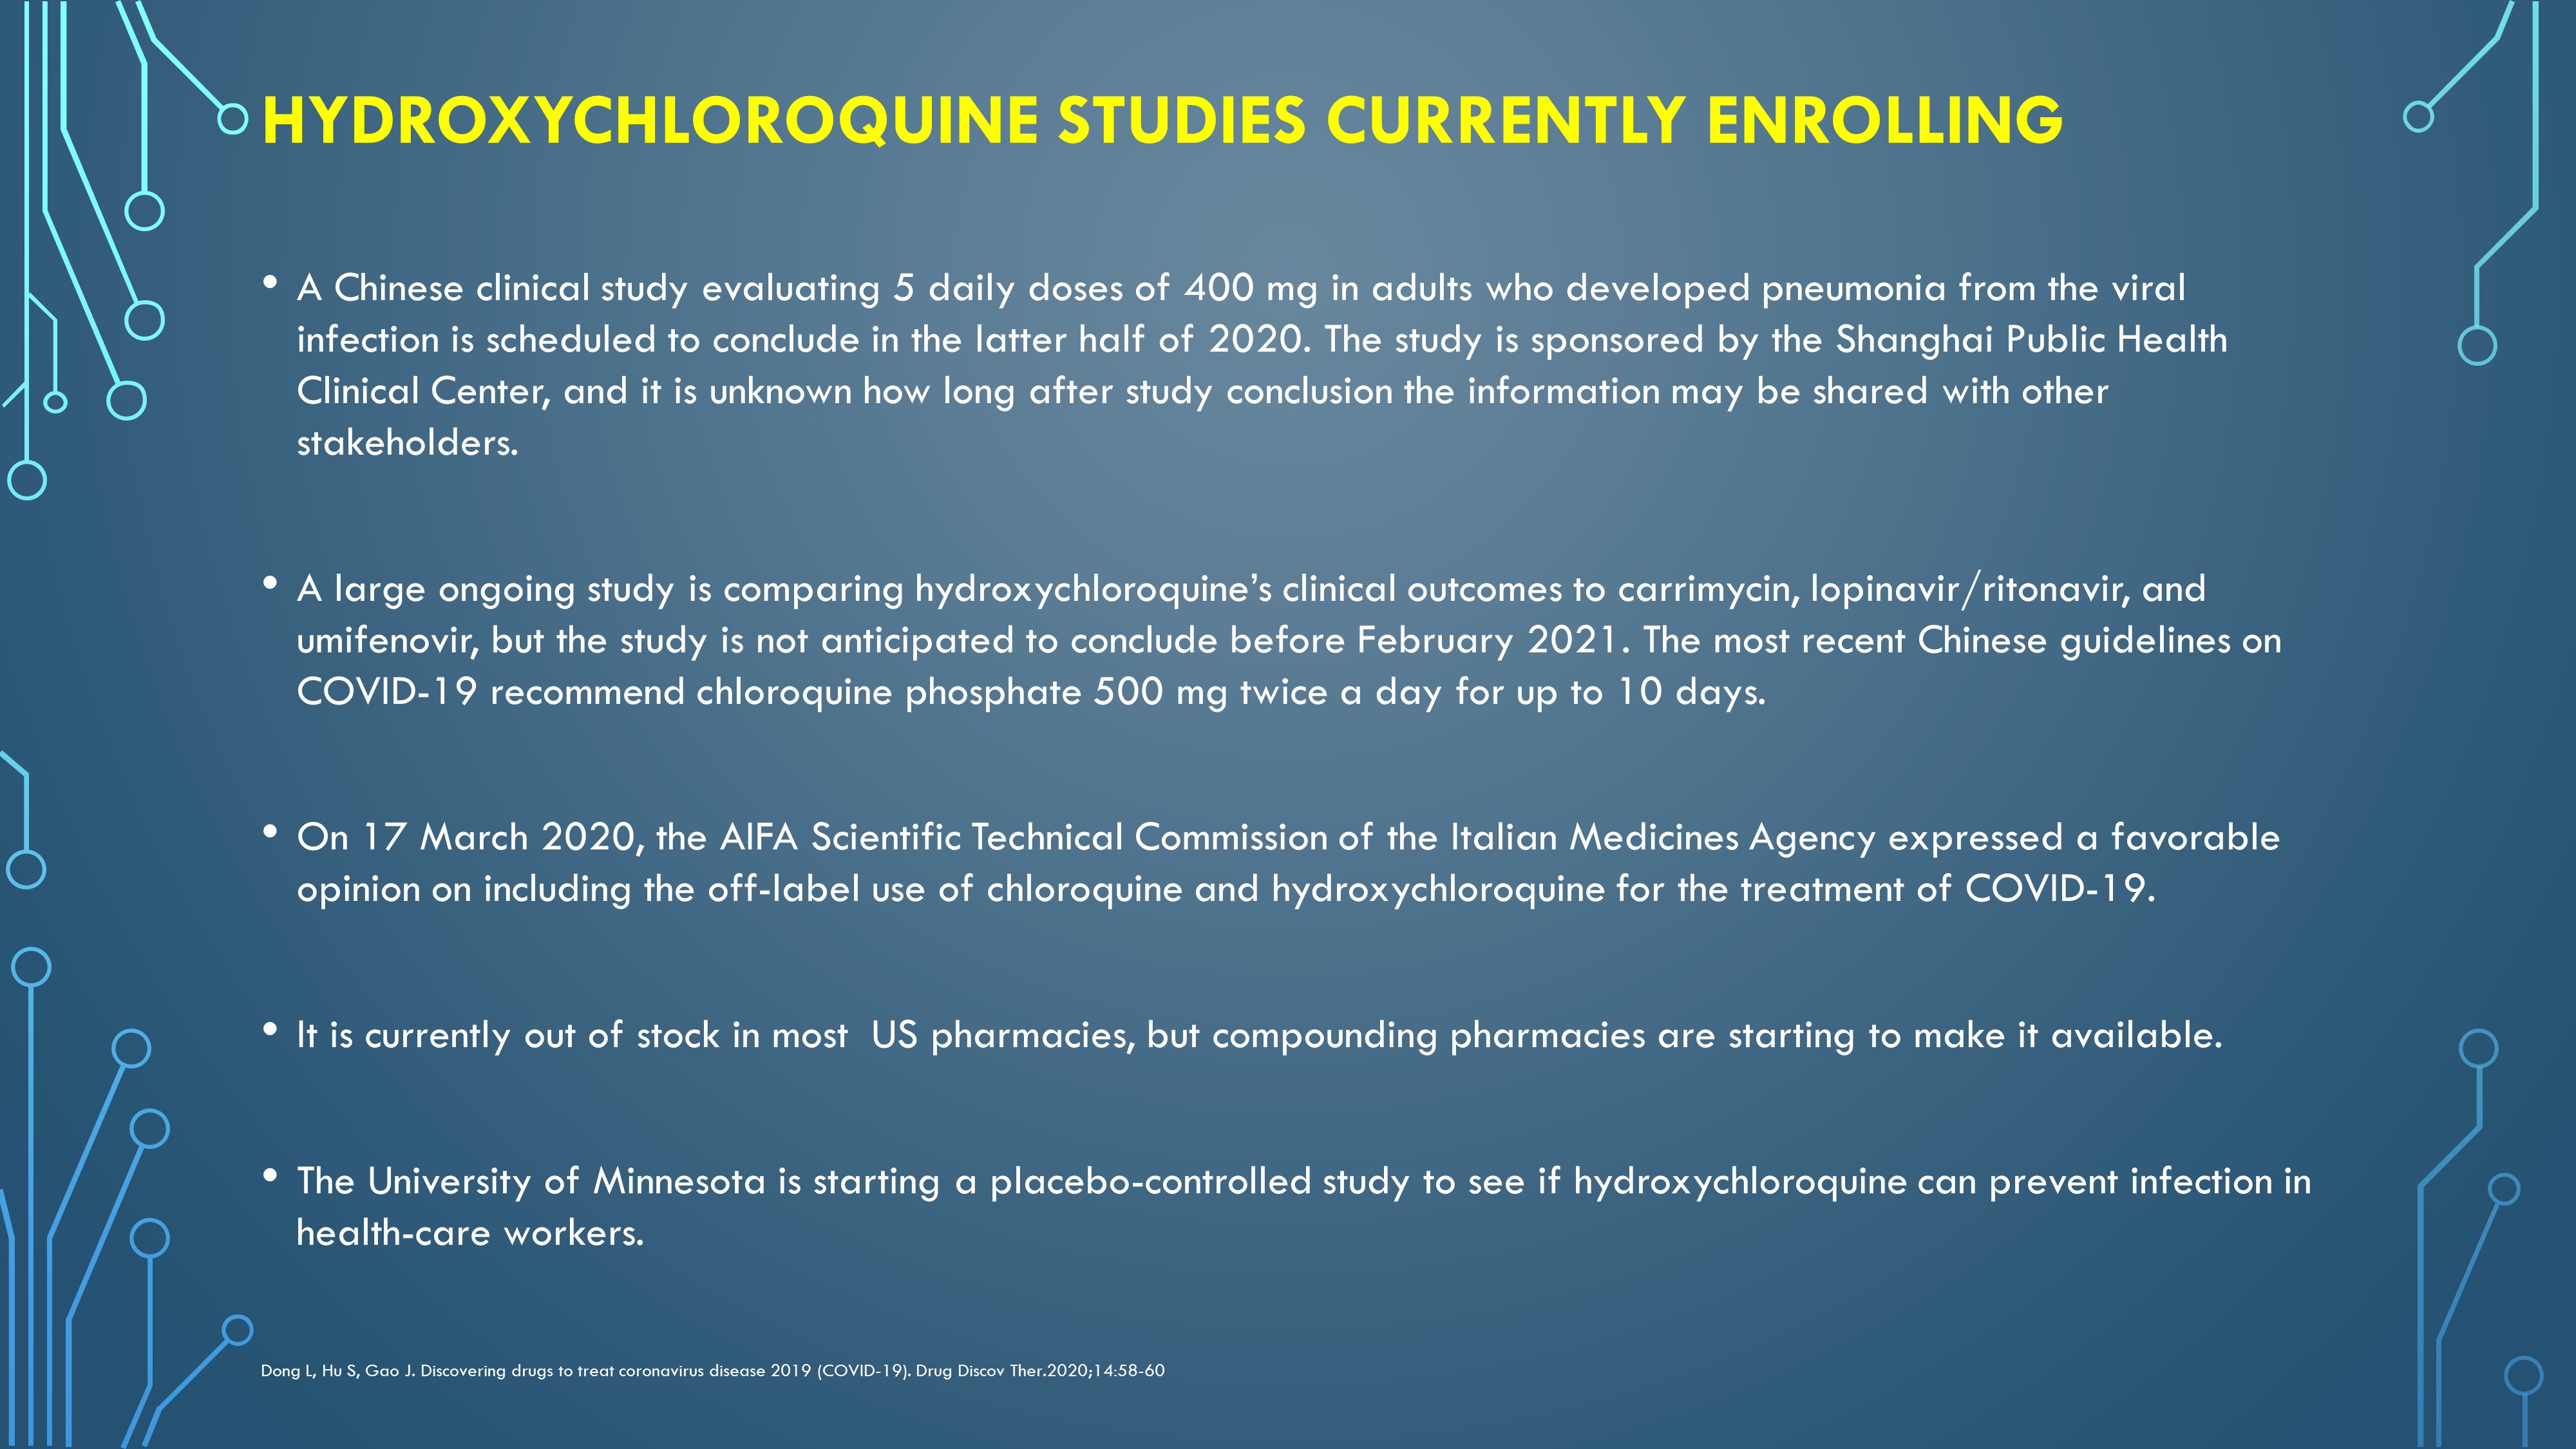 hydroxychloroquine covid19 studies.JPG